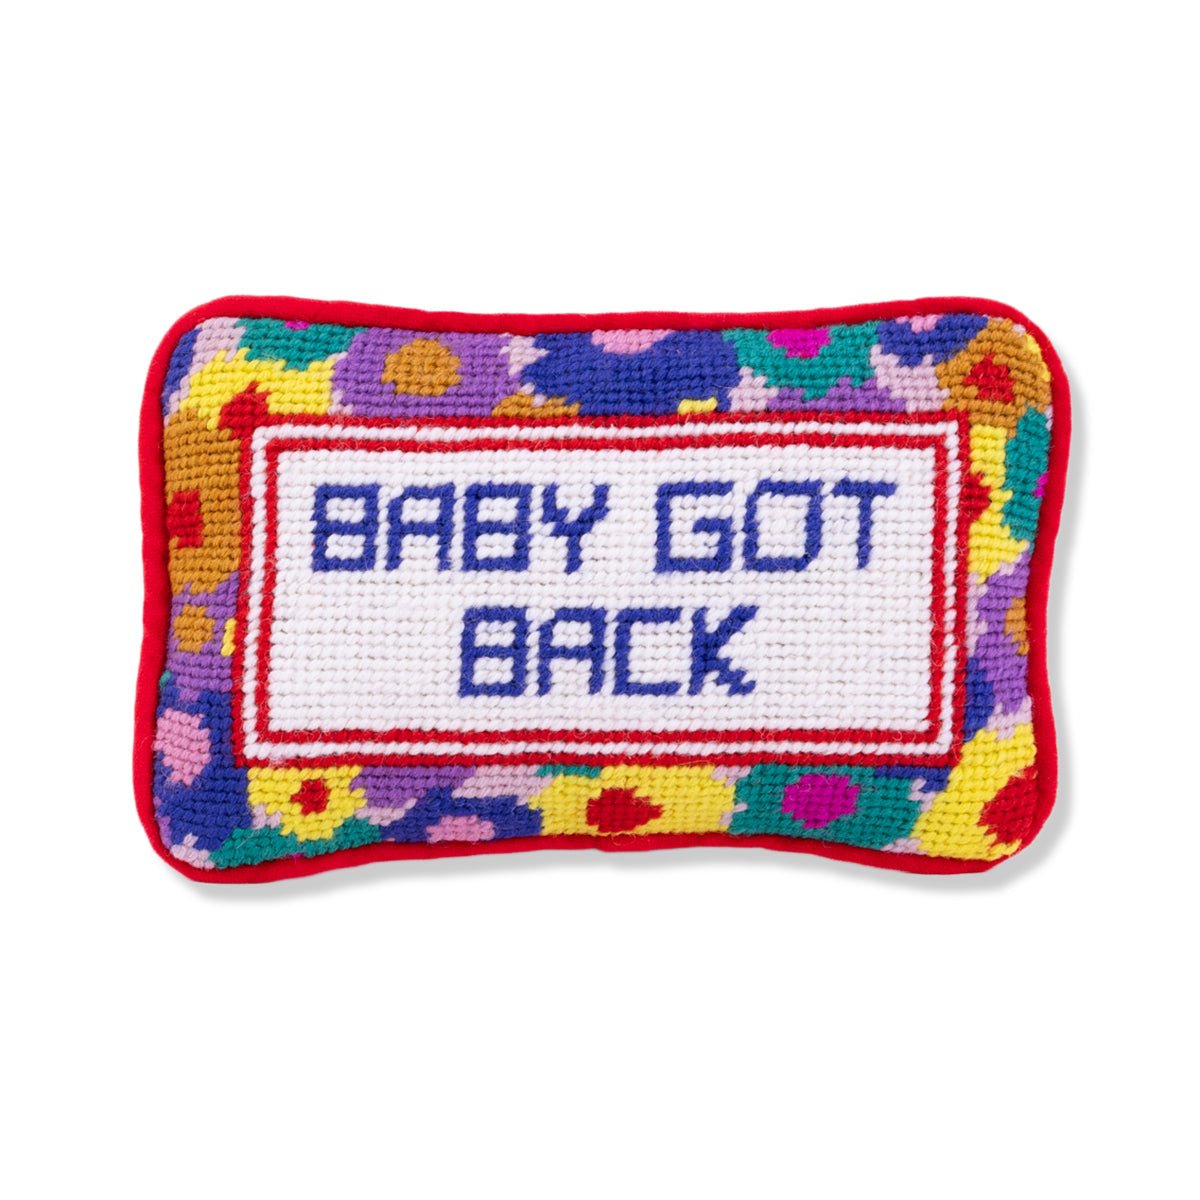 Baby Got Back Mini Needlepoint Pillow - Throw Pillows - Furbish Studio - The Grove